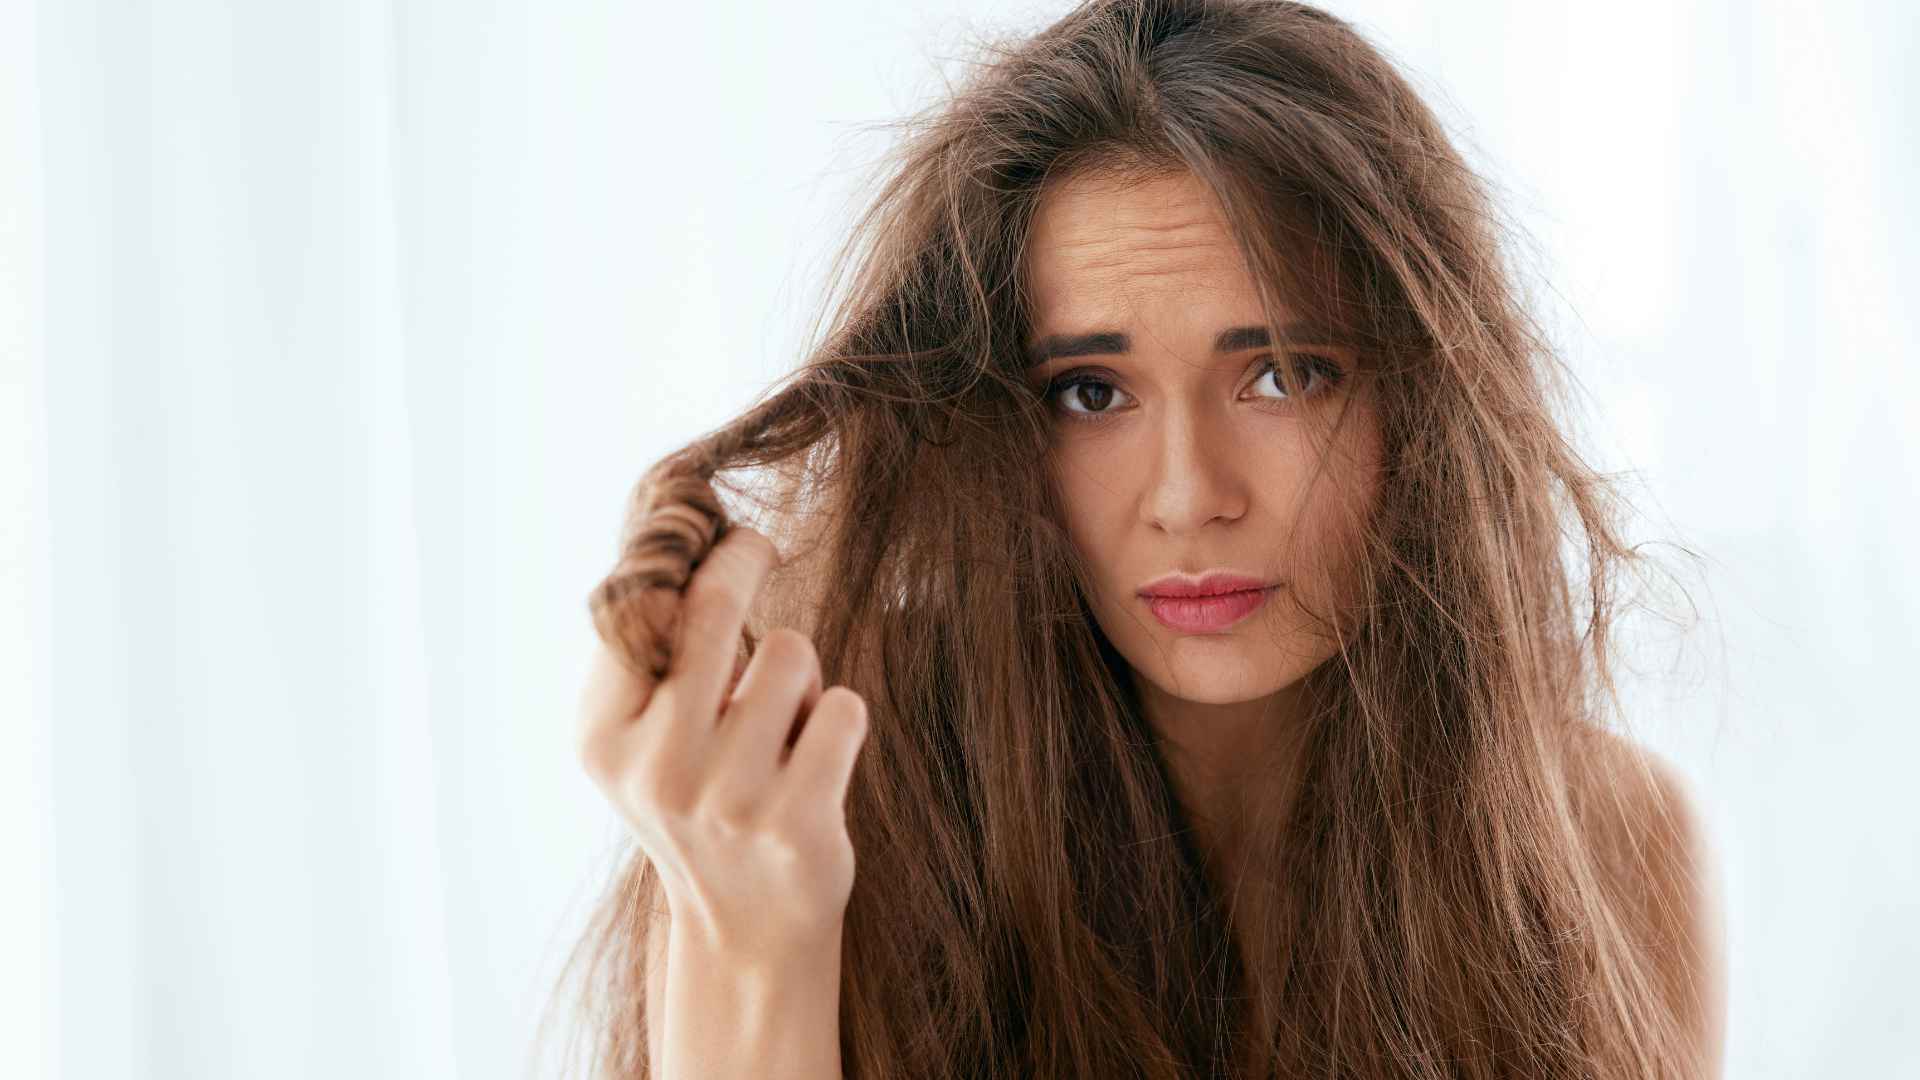 does creatine cause hair loss